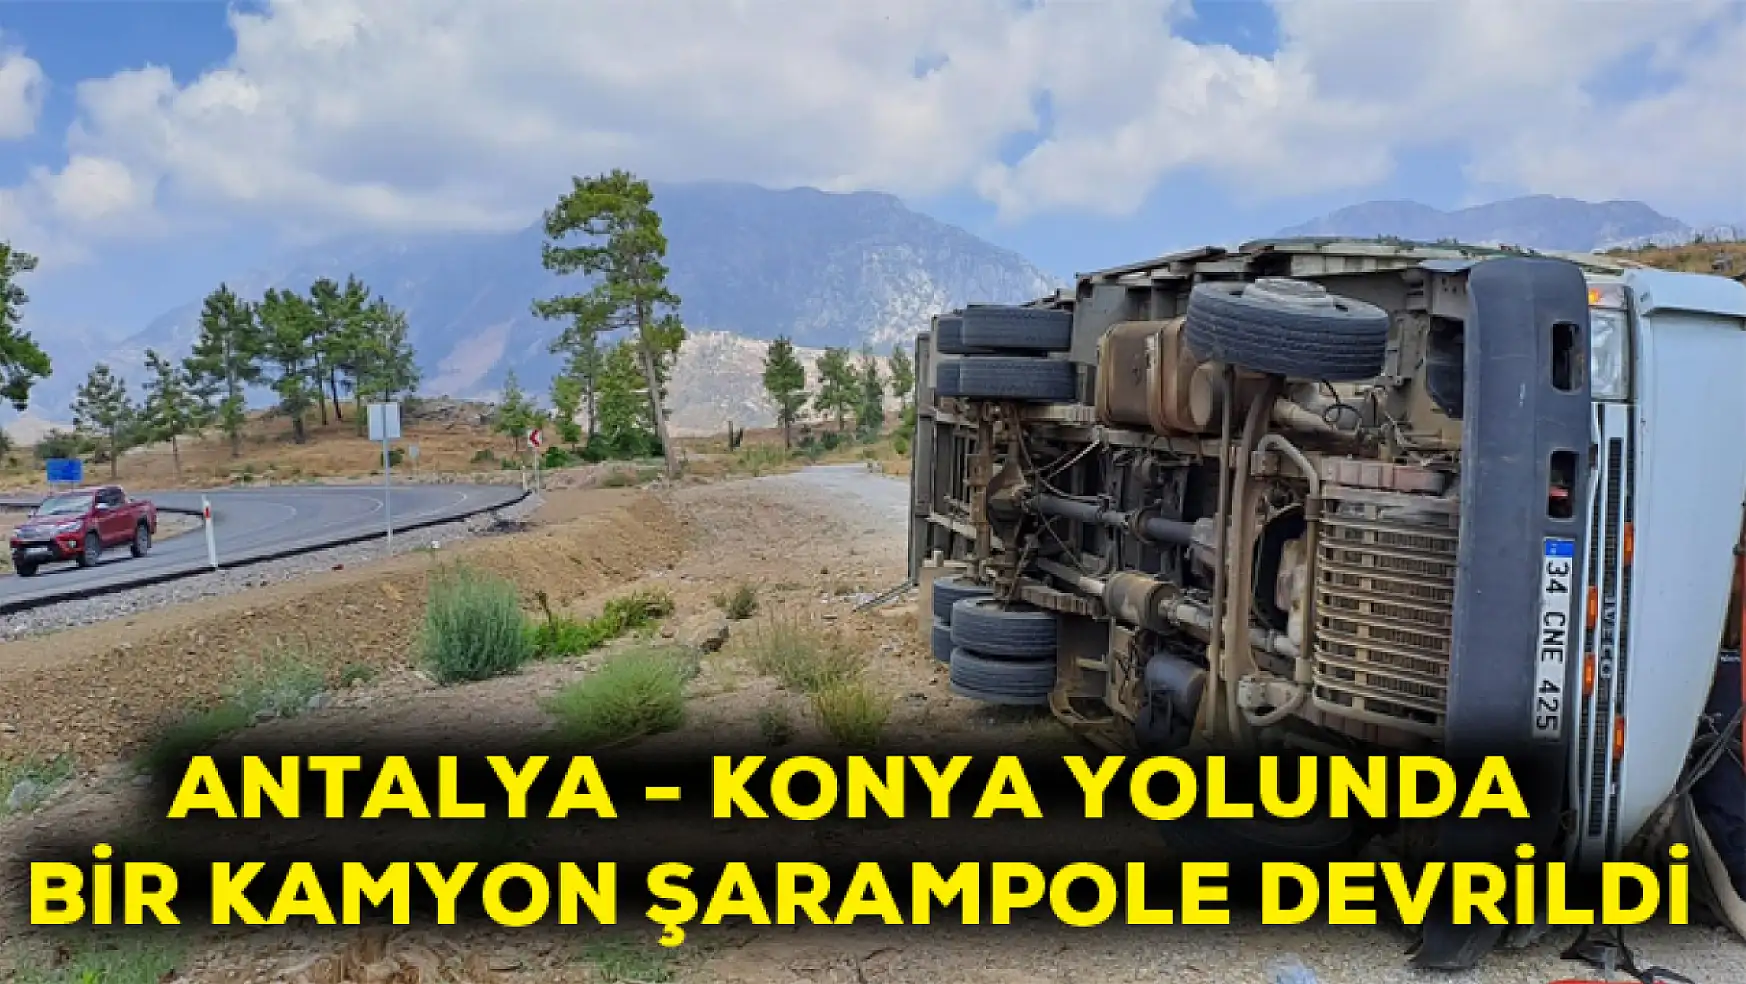 Konya - Antalya yolunda bir kamyon şarampole devrildi